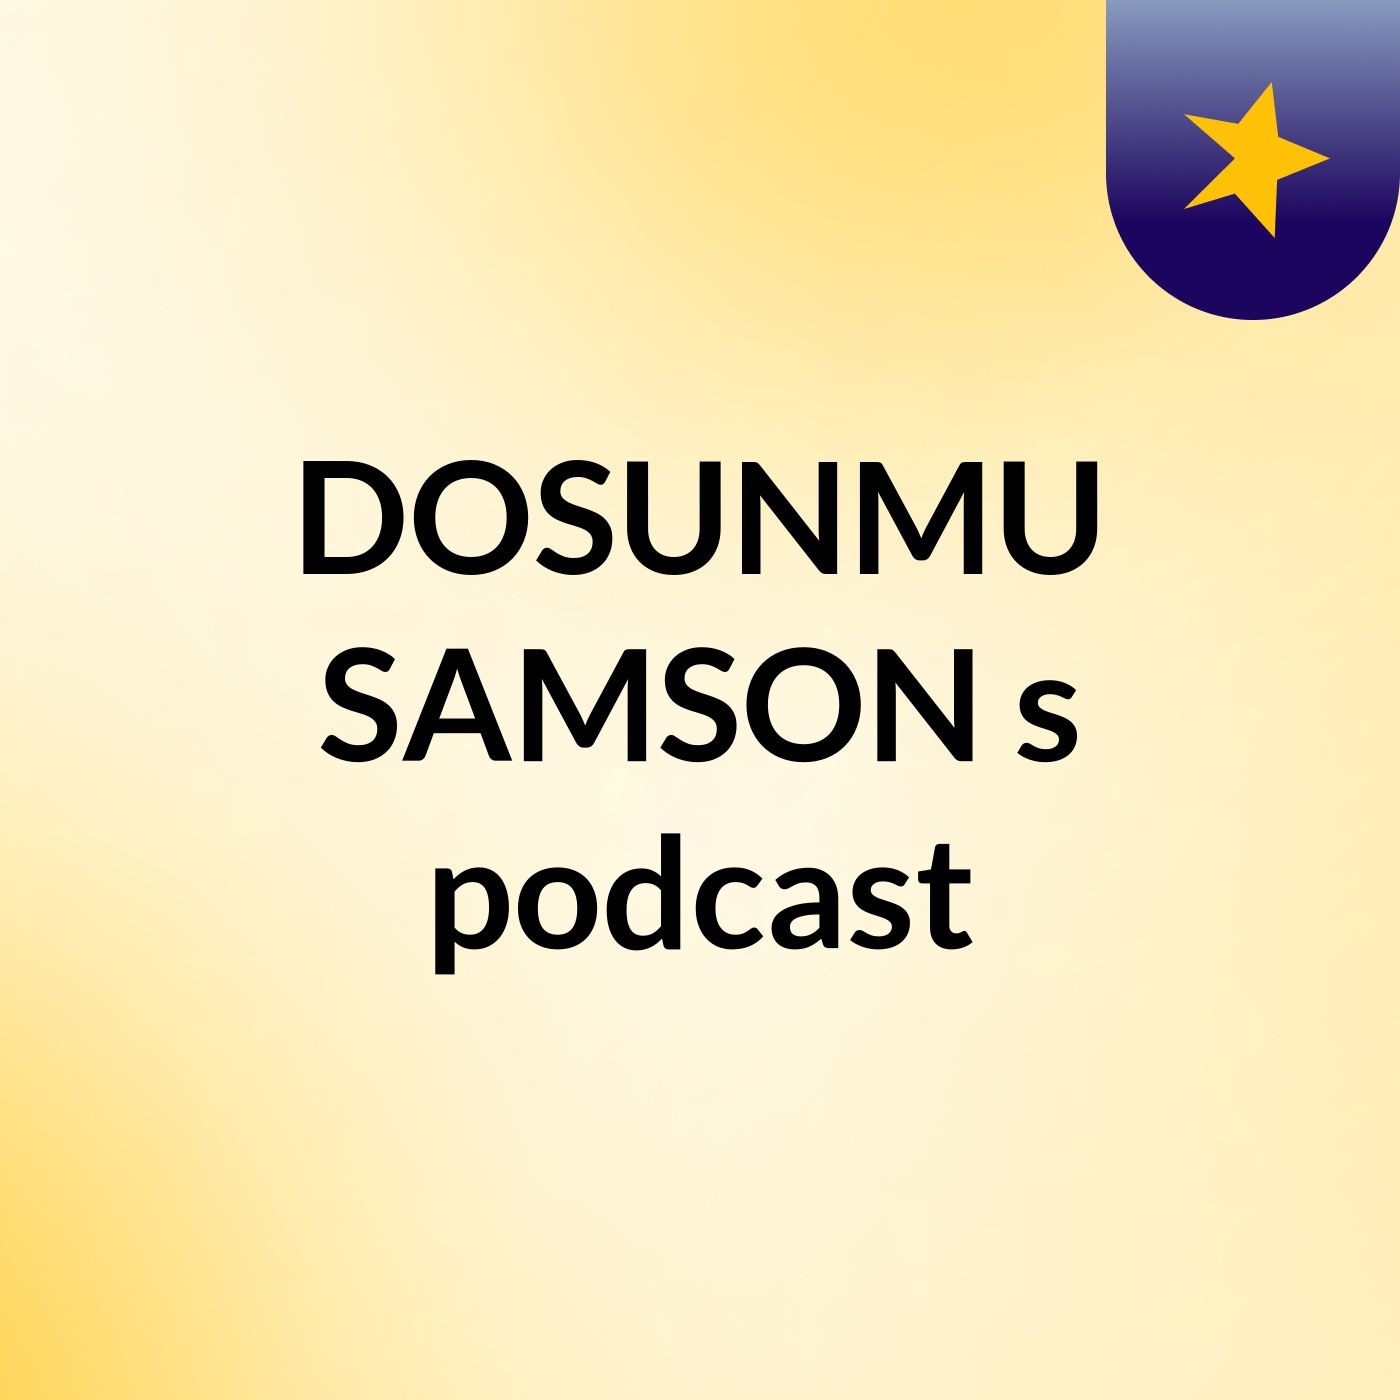 Episode 9 - DOSUNMU SAMSON's podcast